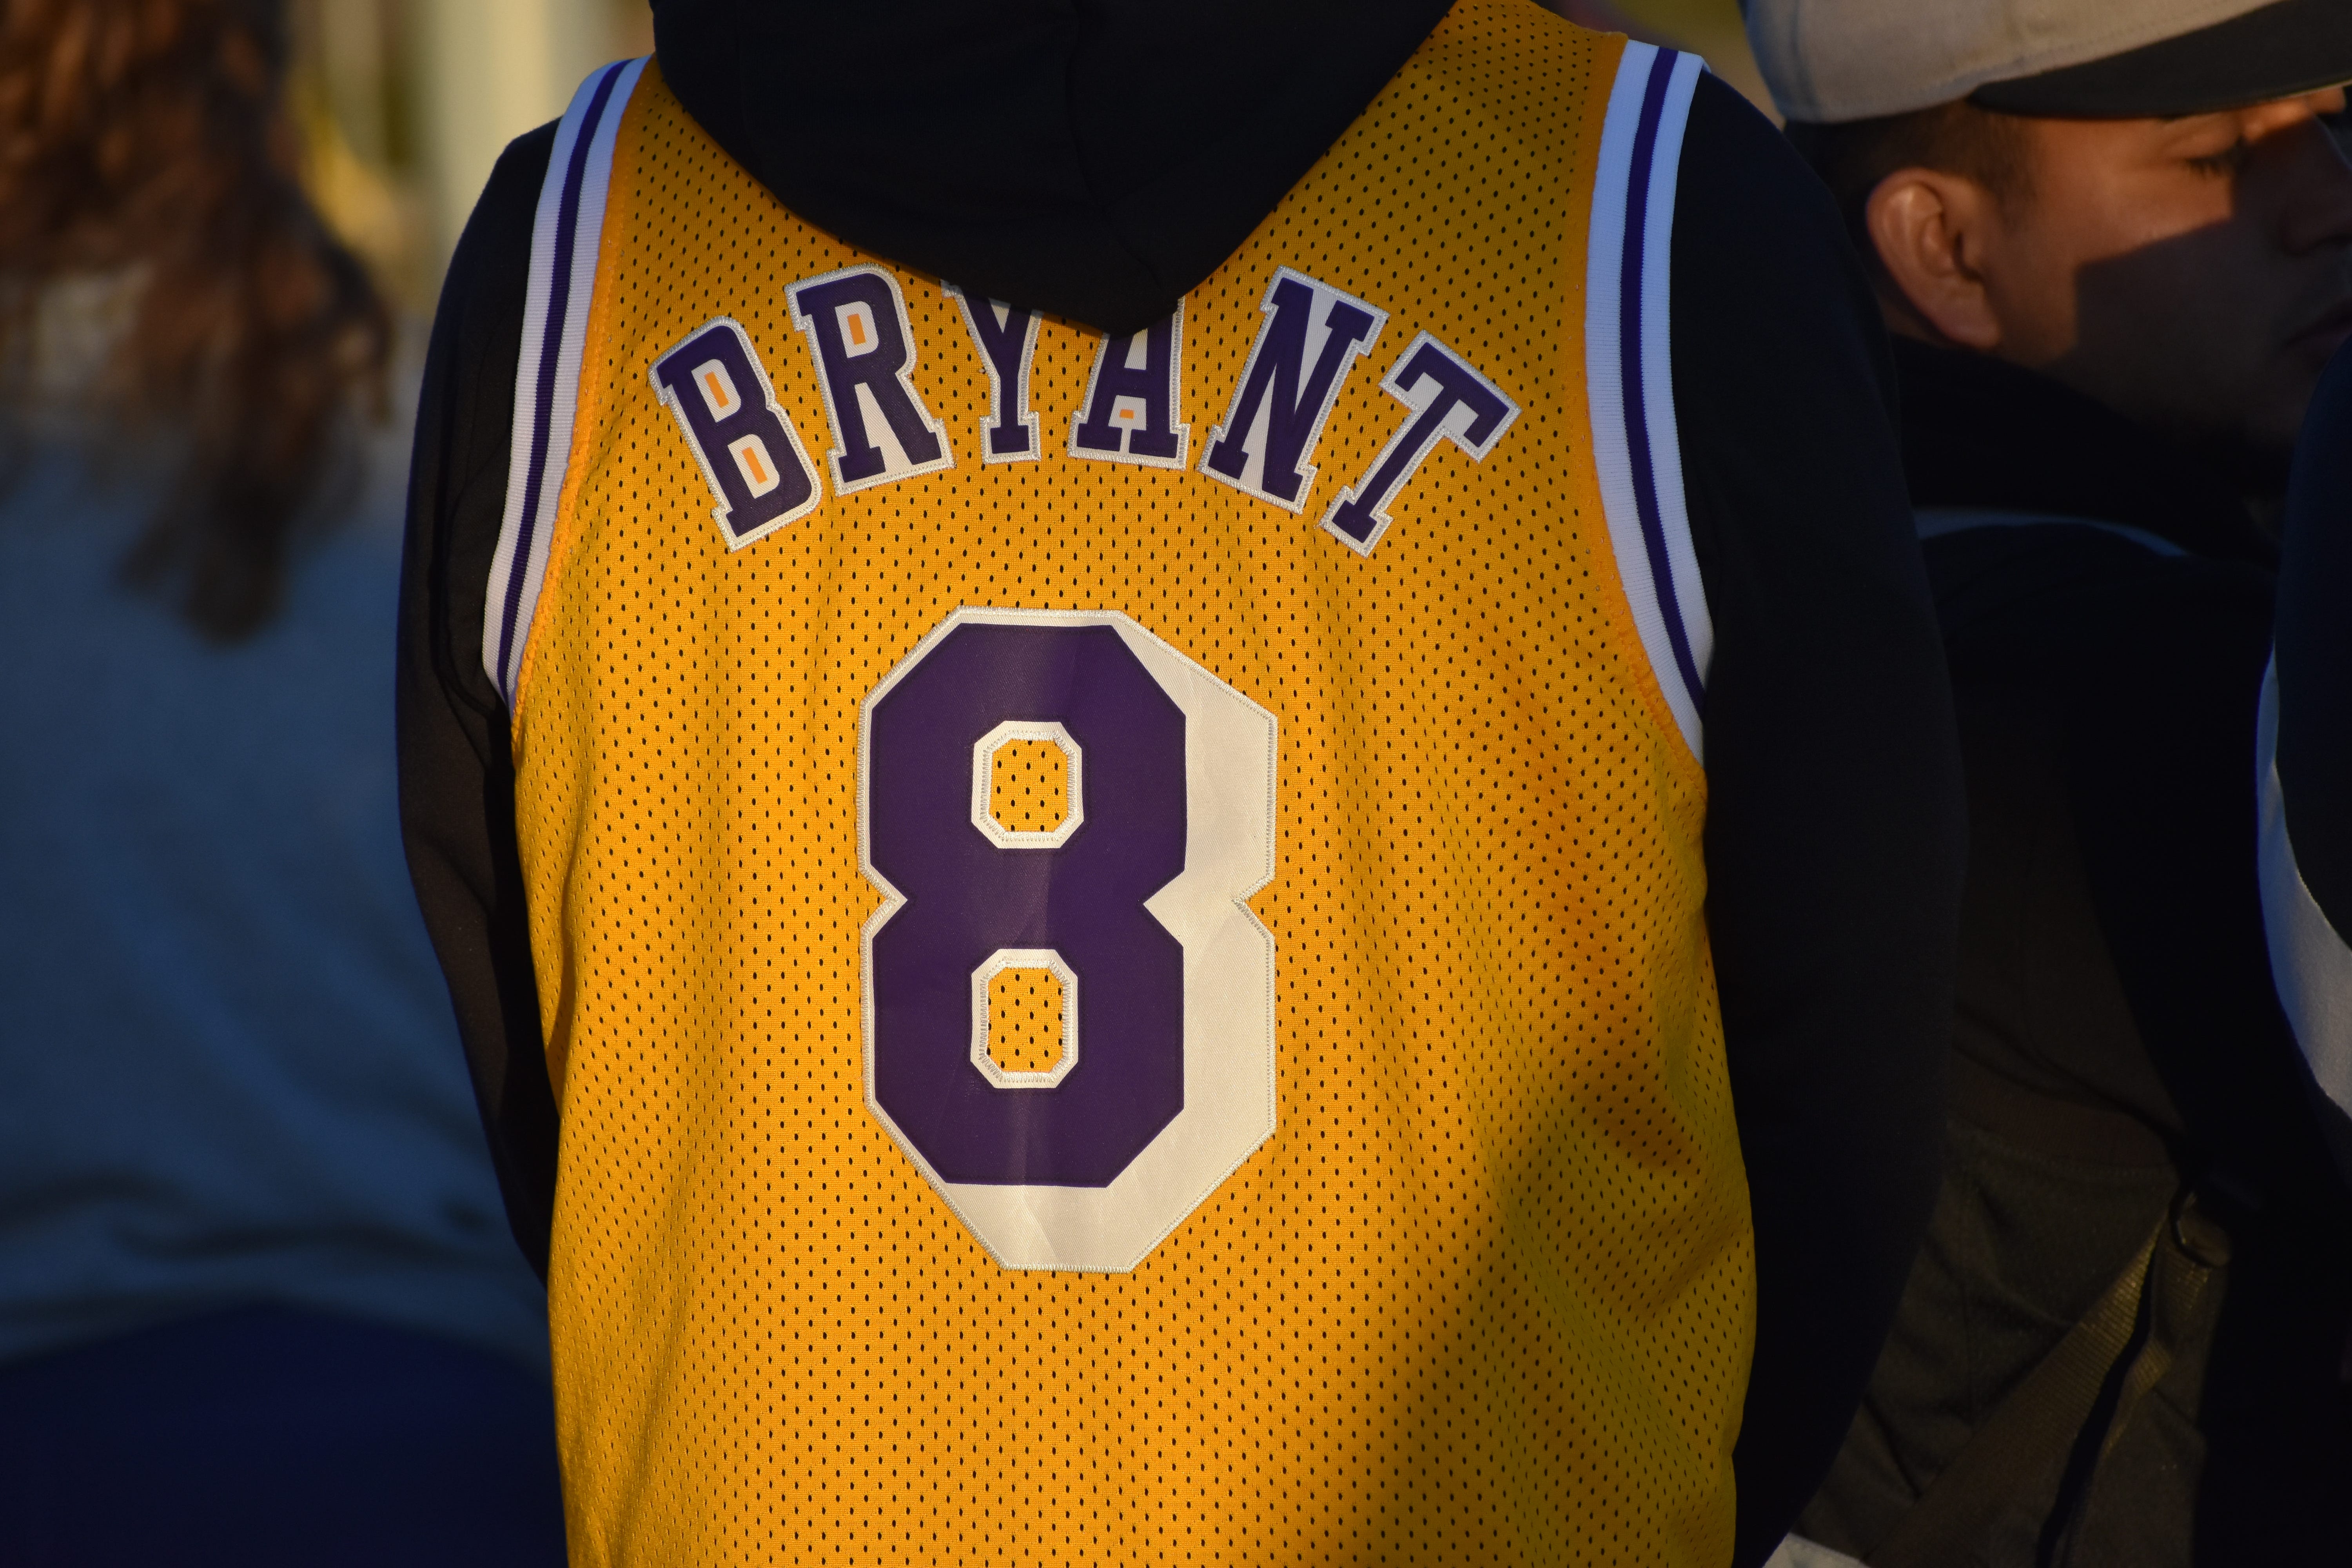 Jersey worn by Kobe Bryant in rookie playoffs sold for $2.7